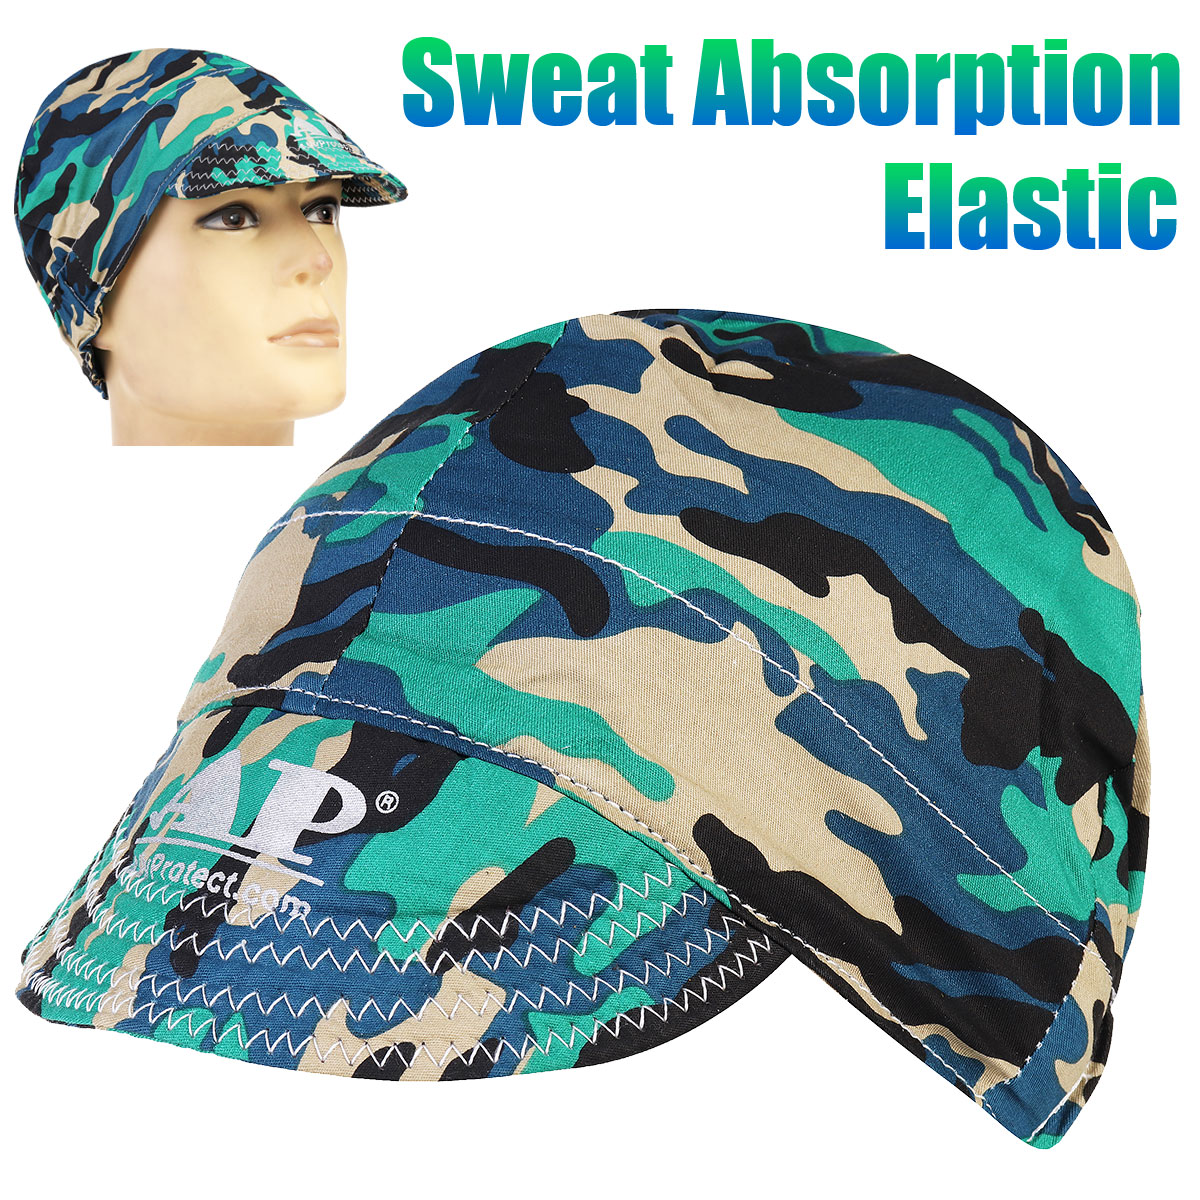 Adjustable-Elastic-Welding-Welders-Hat-Cap-Sweat-Absorption-Cotton-Army-Camouflage-Summer-1295873-1